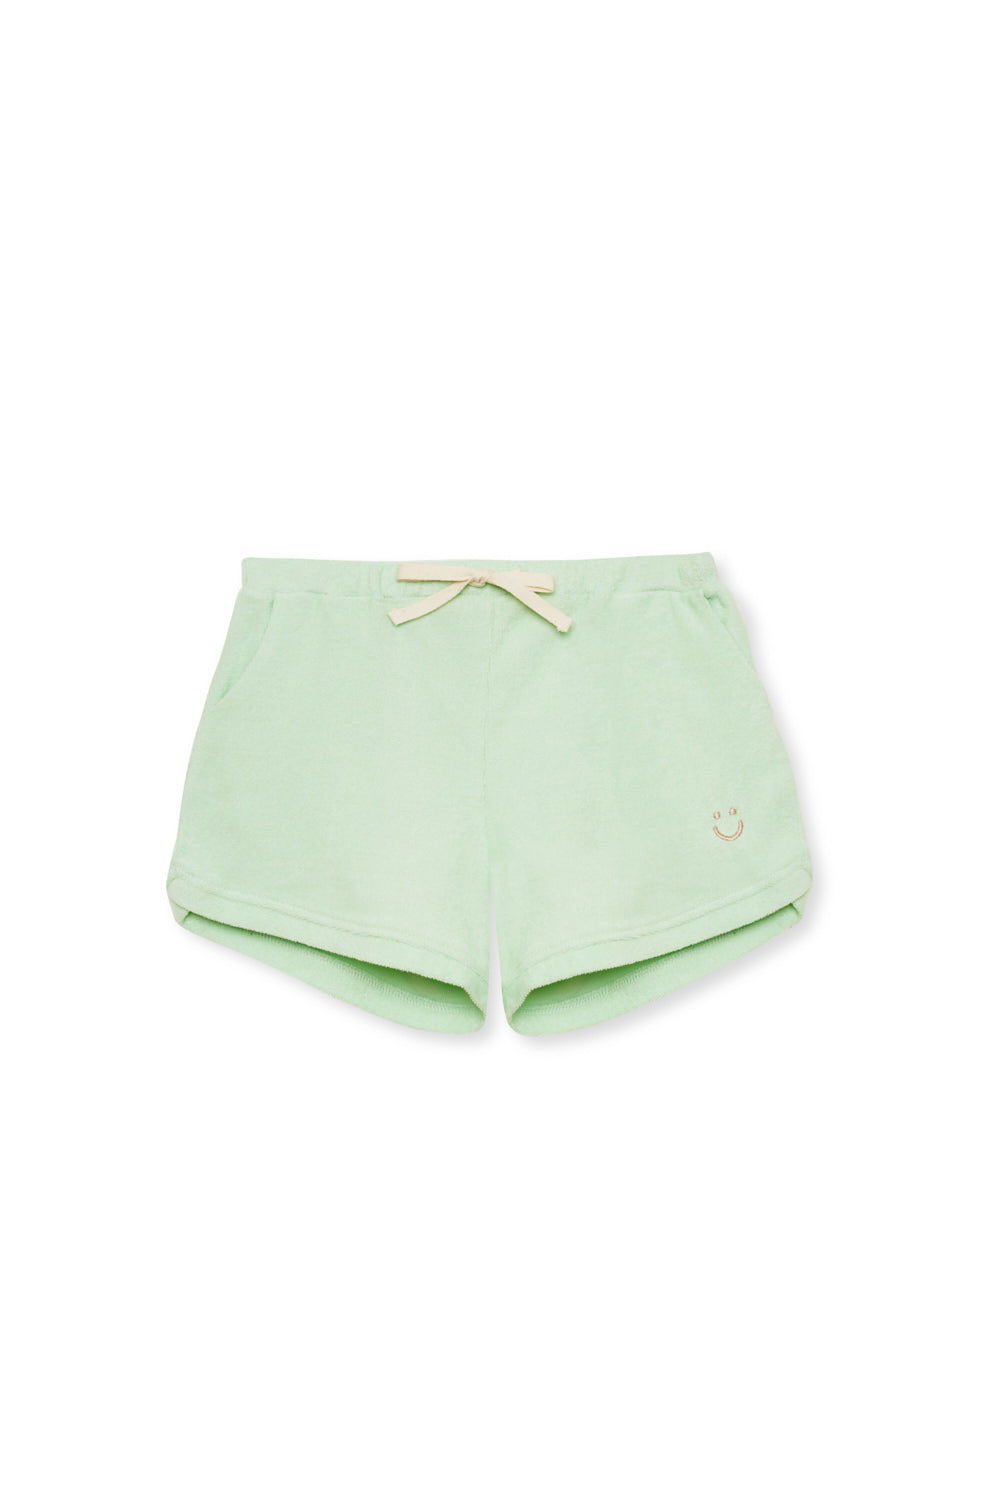 Mekong Shorts Green Shorts Jellymade 